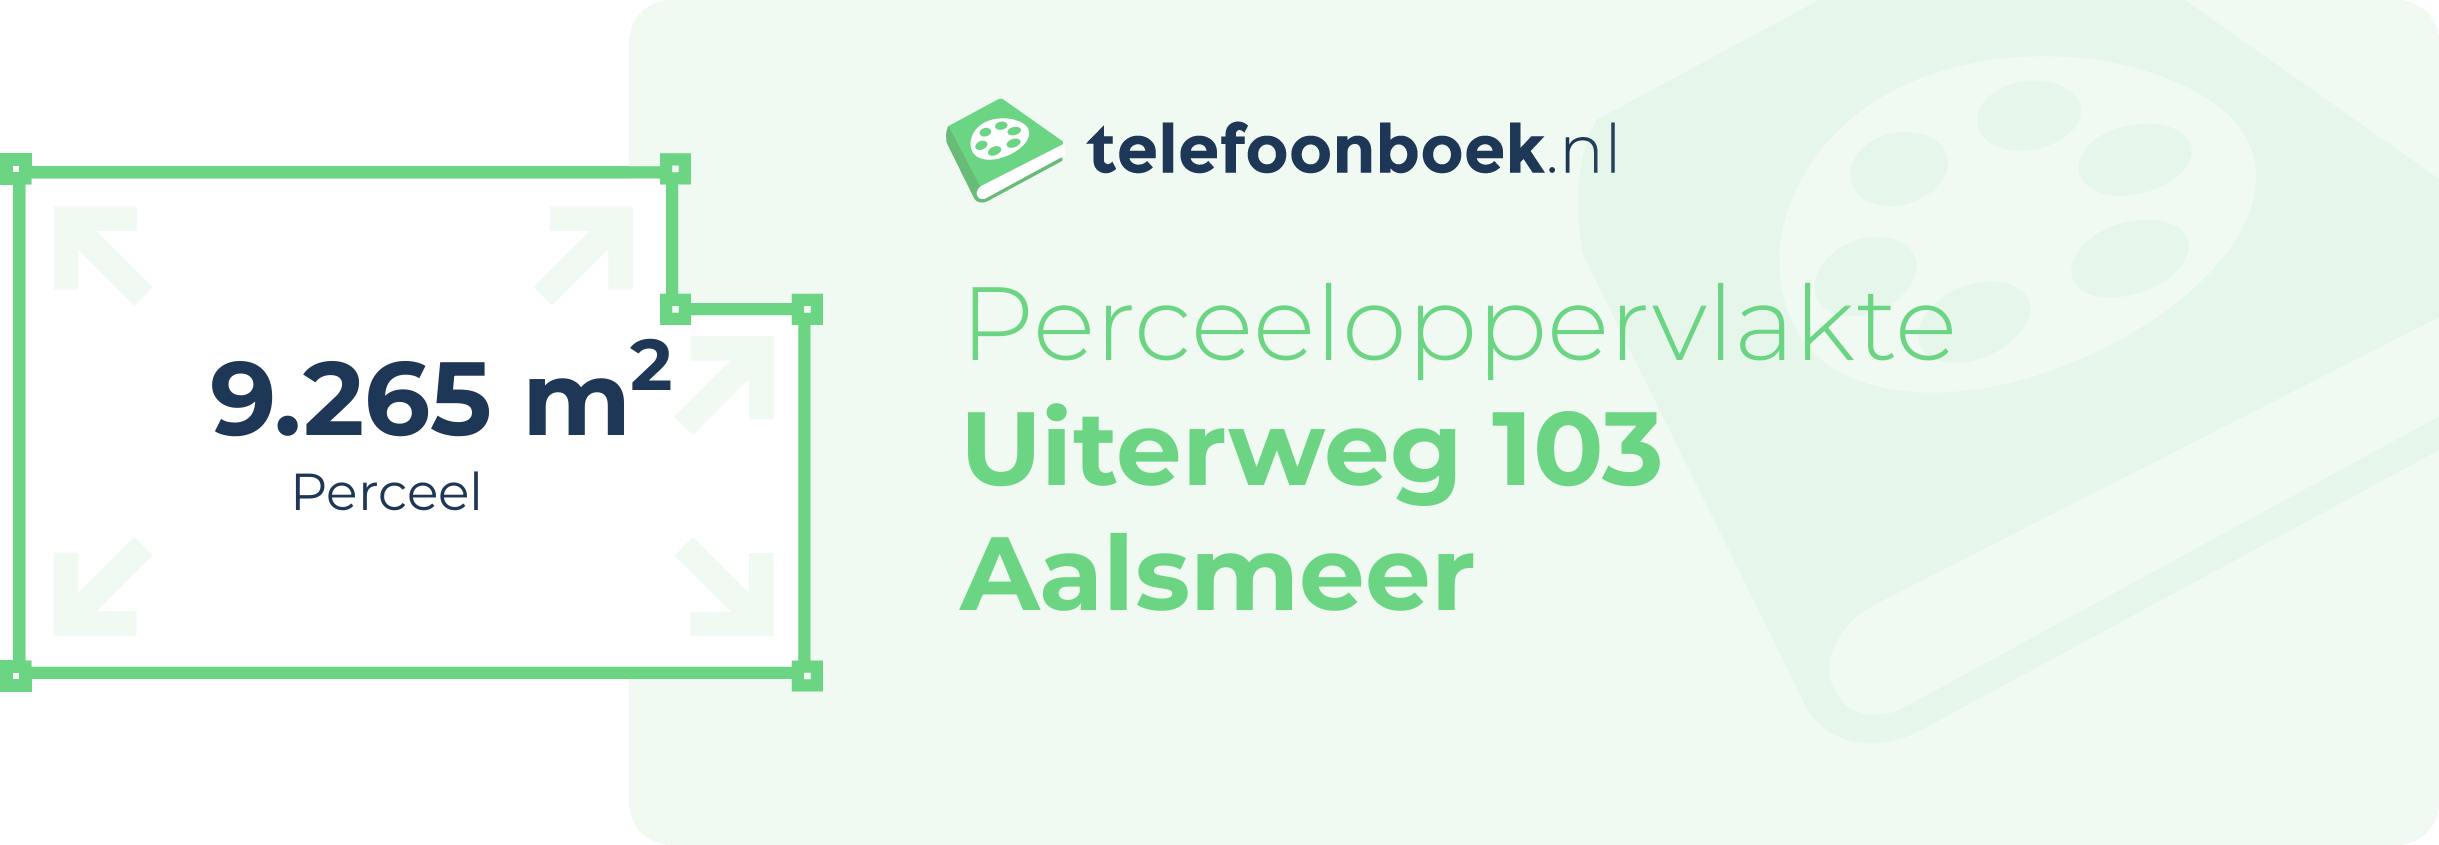 Perceeloppervlakte Uiterweg 103 Aalsmeer